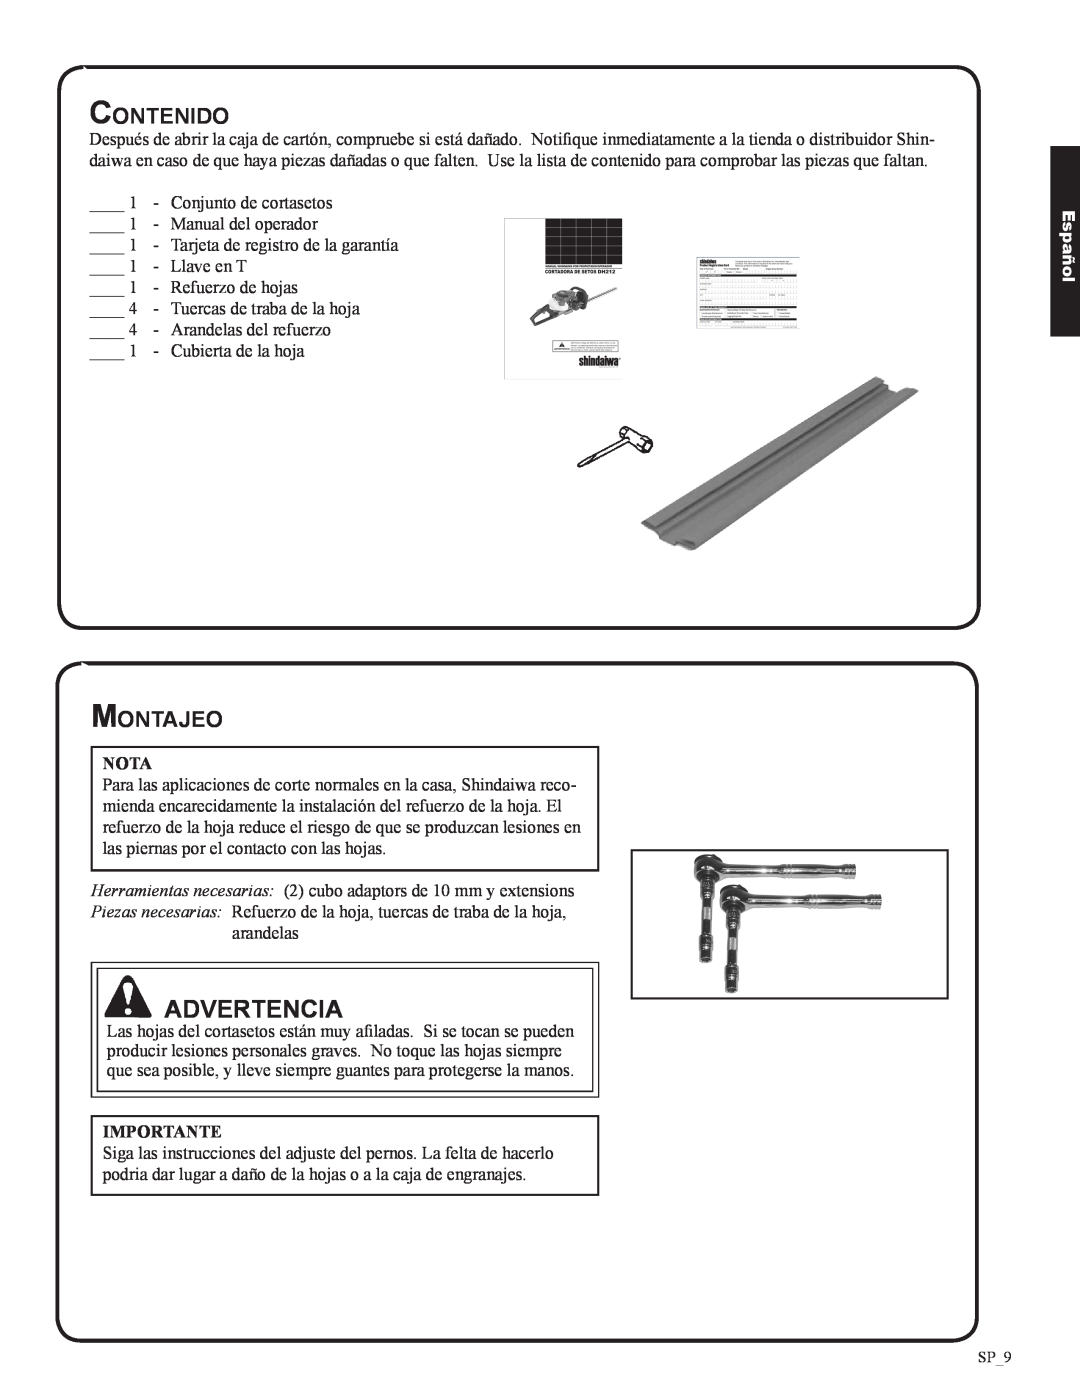 Shindaiwa 82053, DH212 manual Contenido, Montajeo, Advertencia, Nota, Importante, Español 